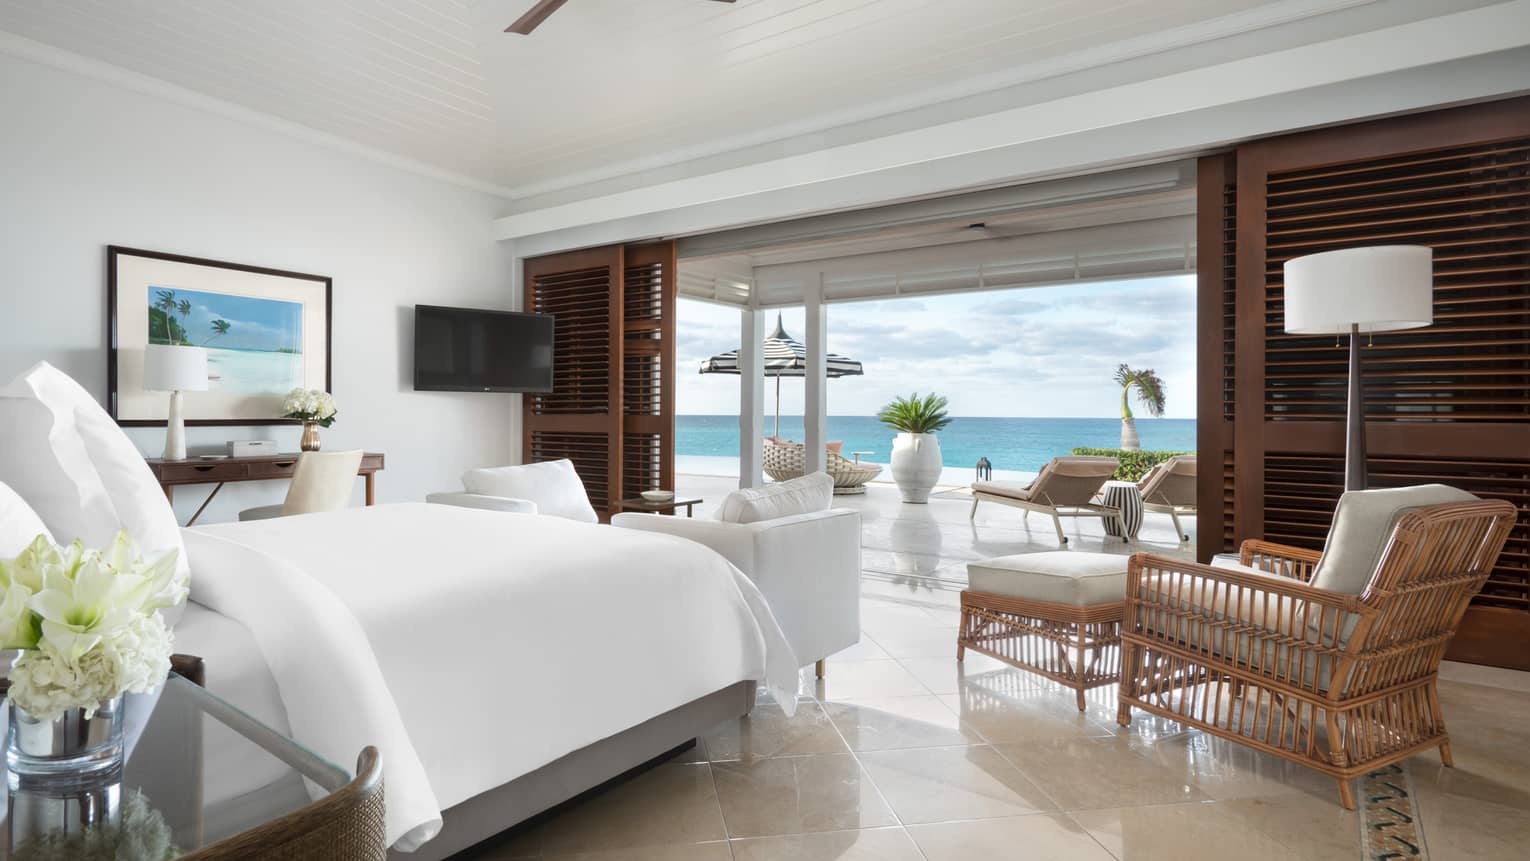 Beachfront Villa Residence Master Bedroom overlooking the ocean